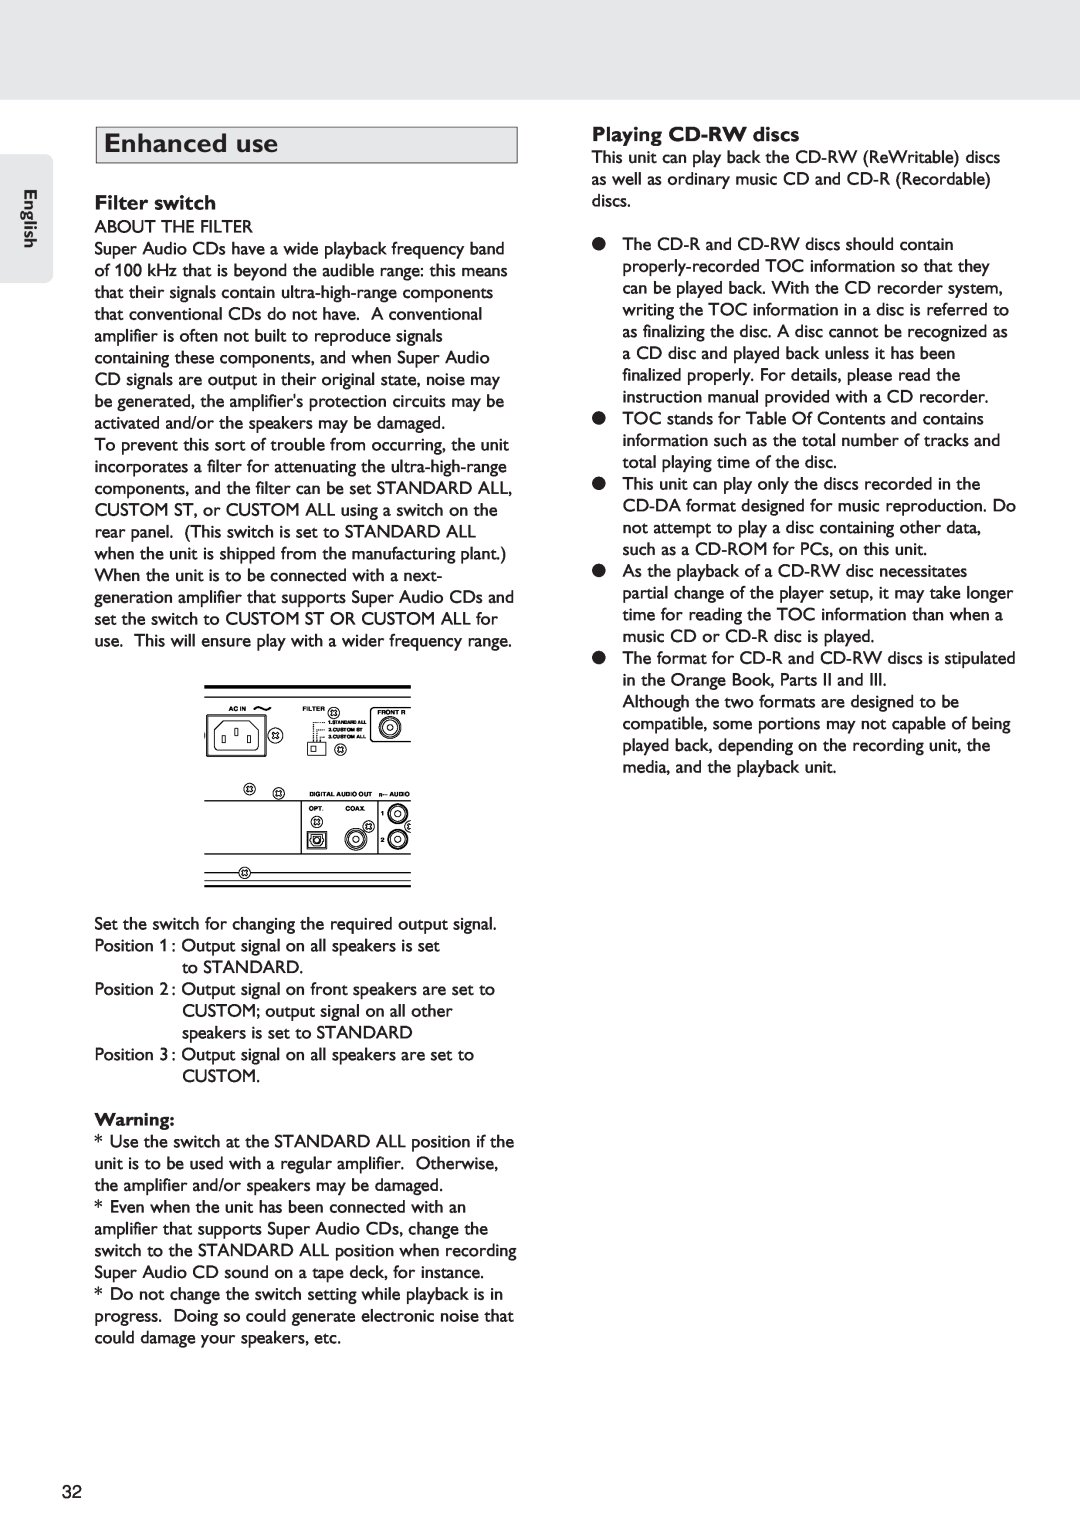 Marantz SA-12S1 manual Enhanced use, Filter switch, Playing CD-RWdiscs, English 